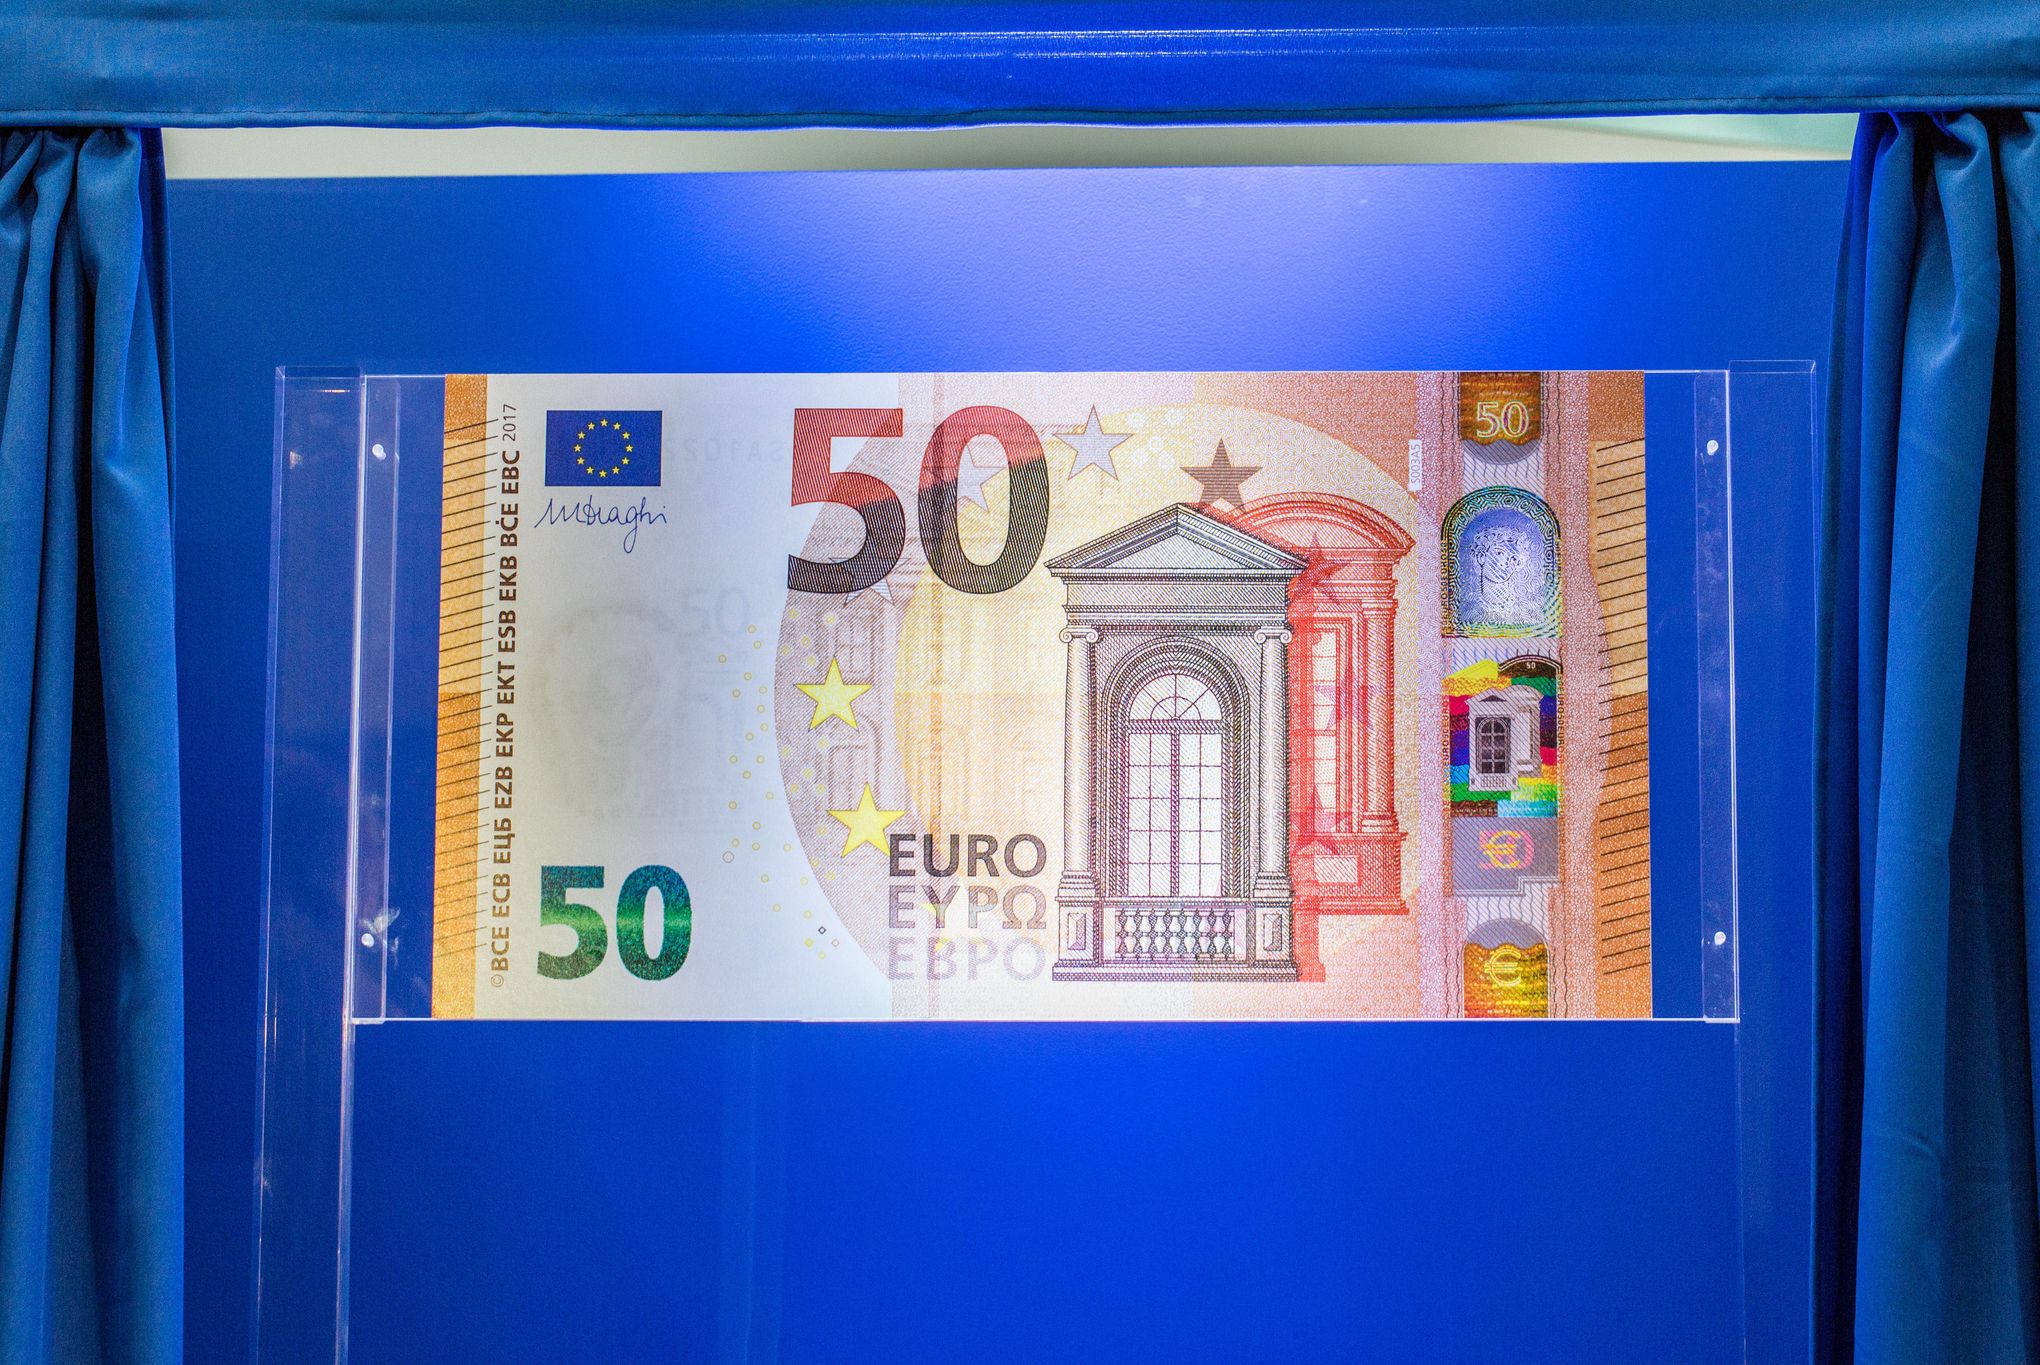 50 euro note